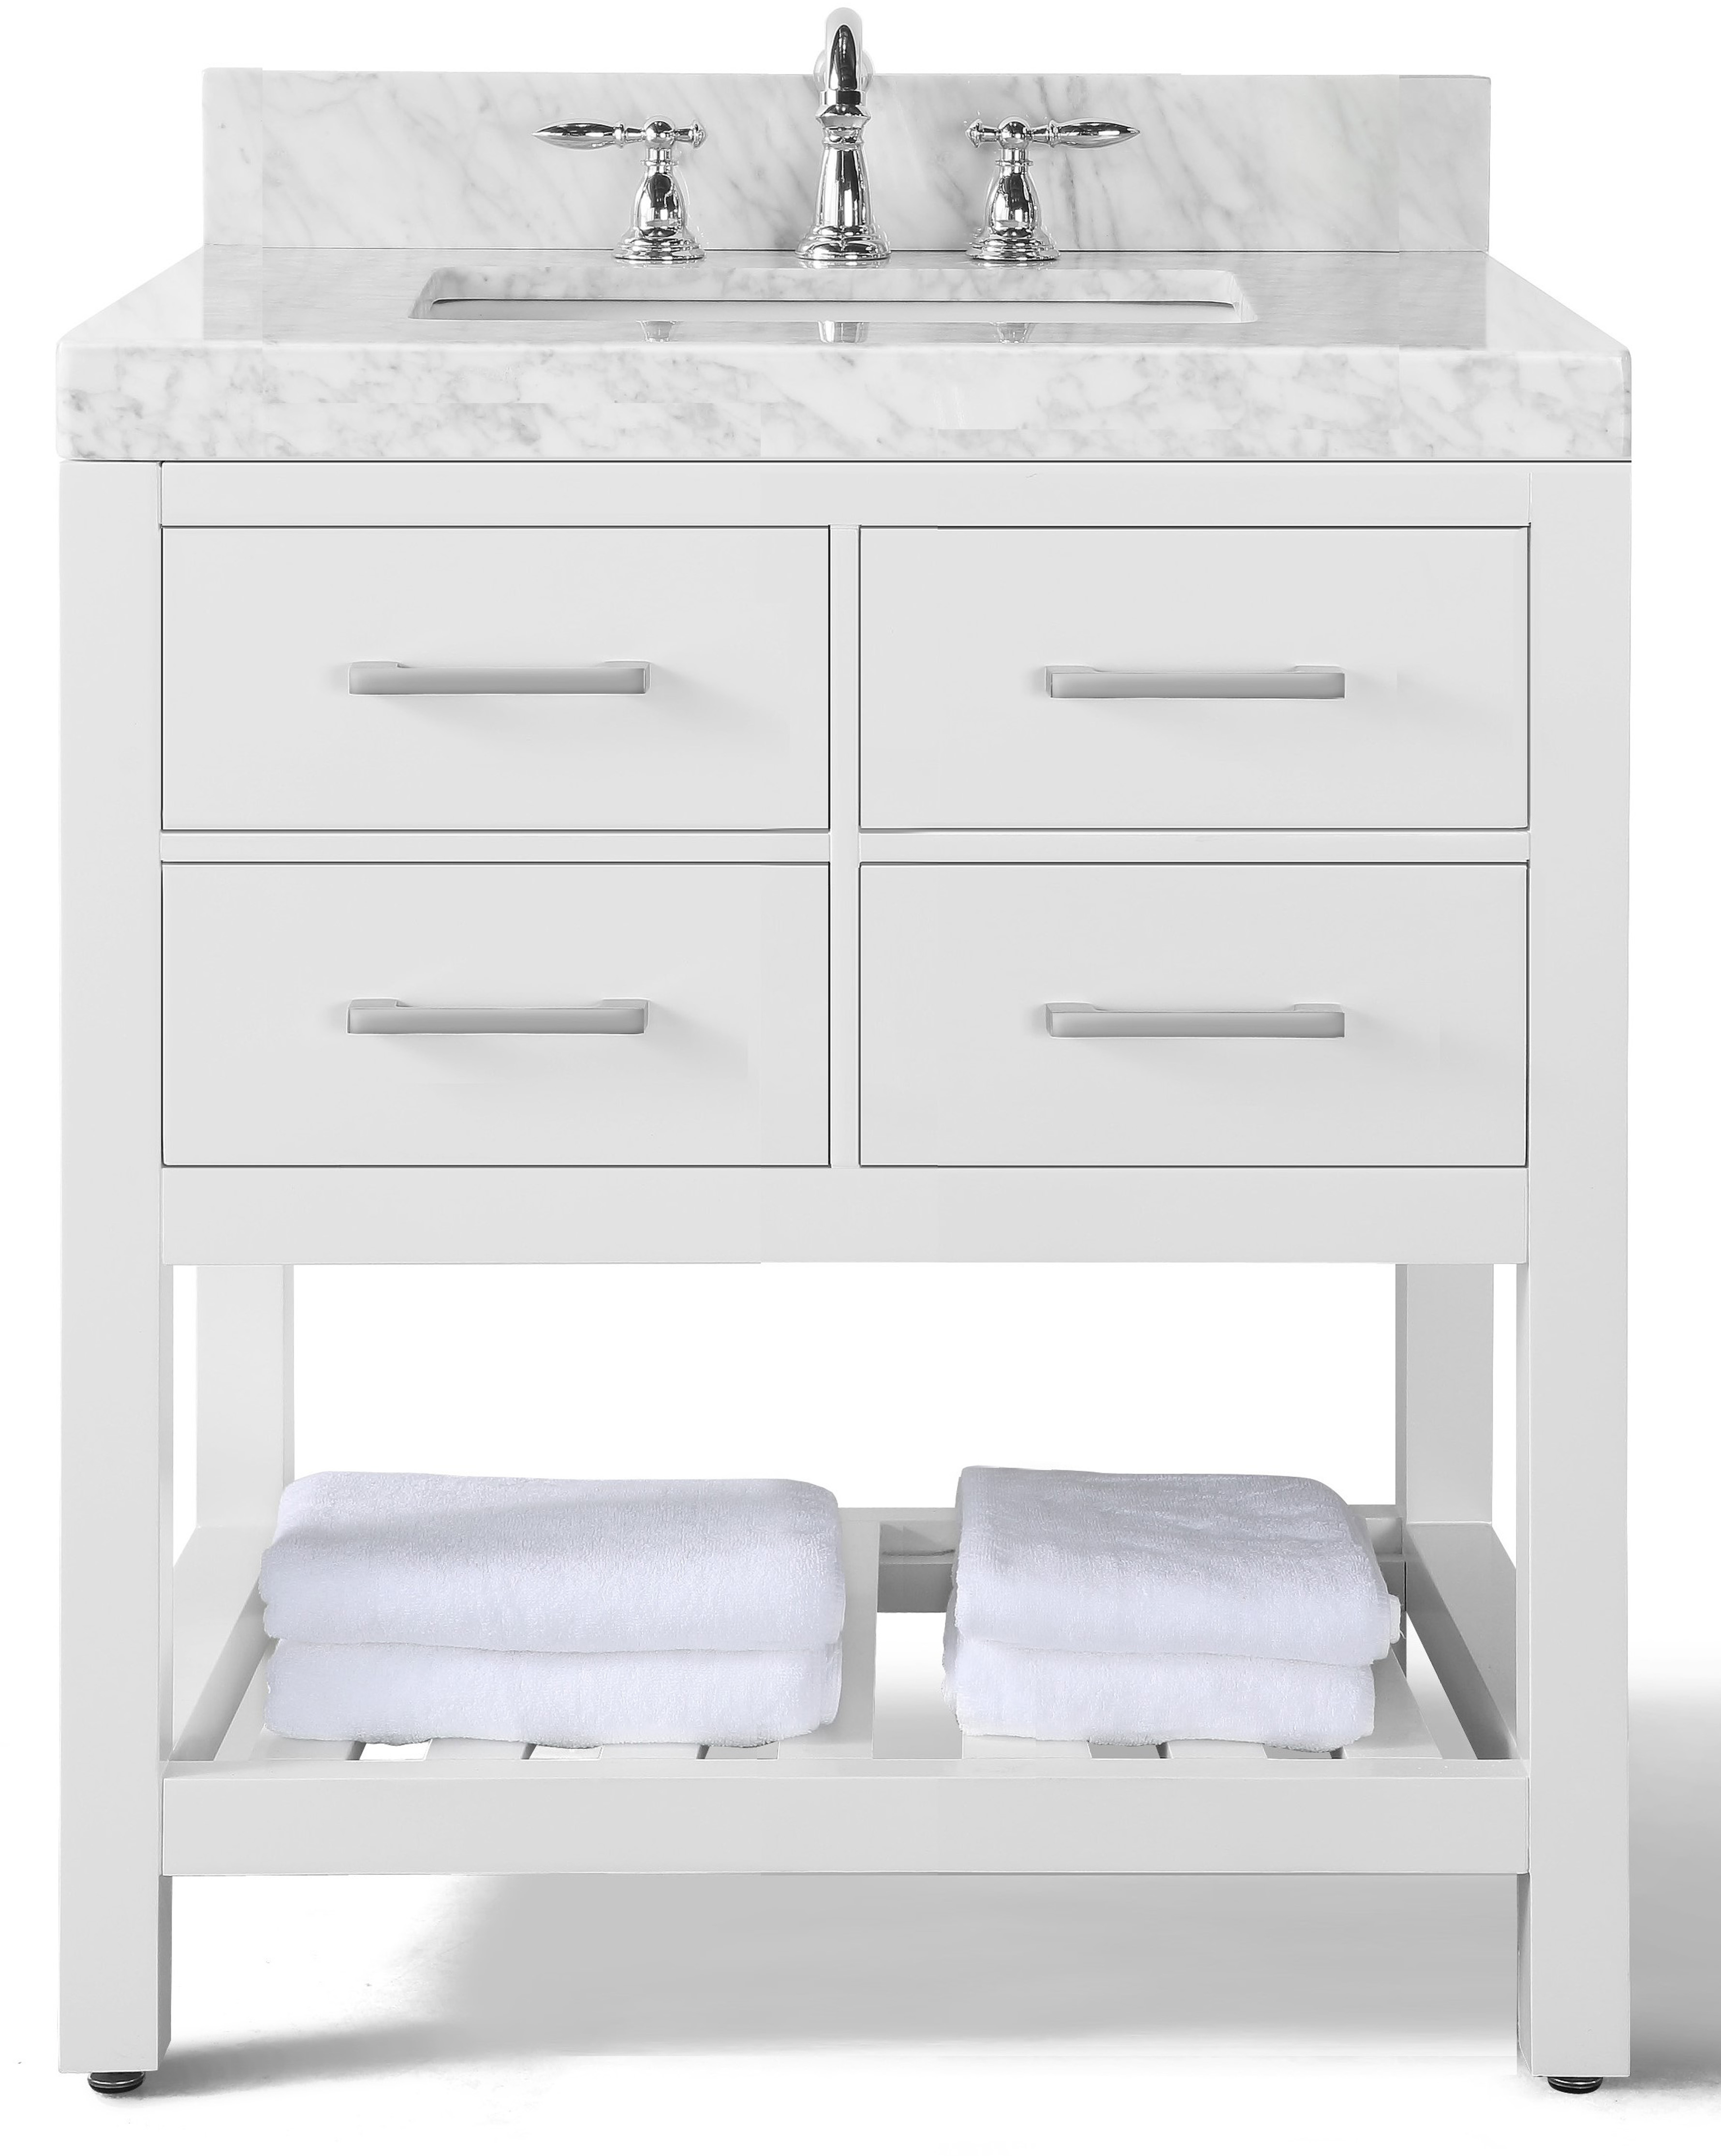 36" Single Sink Bath Vanity Set in White with Italian Carrara White Marble Vanity top and White Undermount Basin